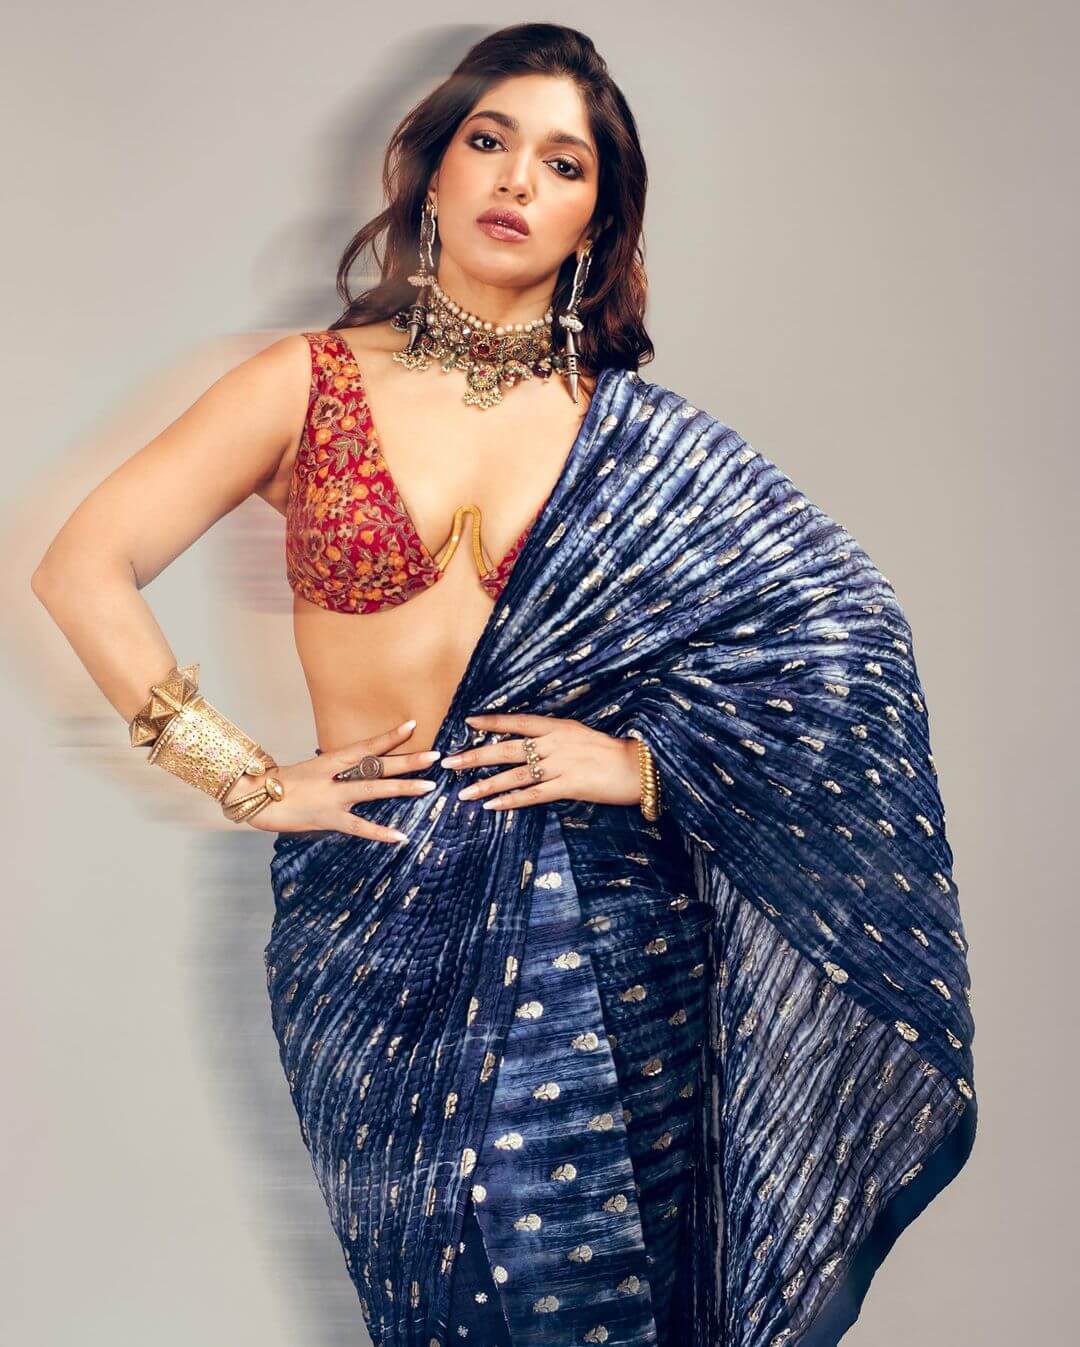 Bhumi Pednekar's Sari Is Art In Motion